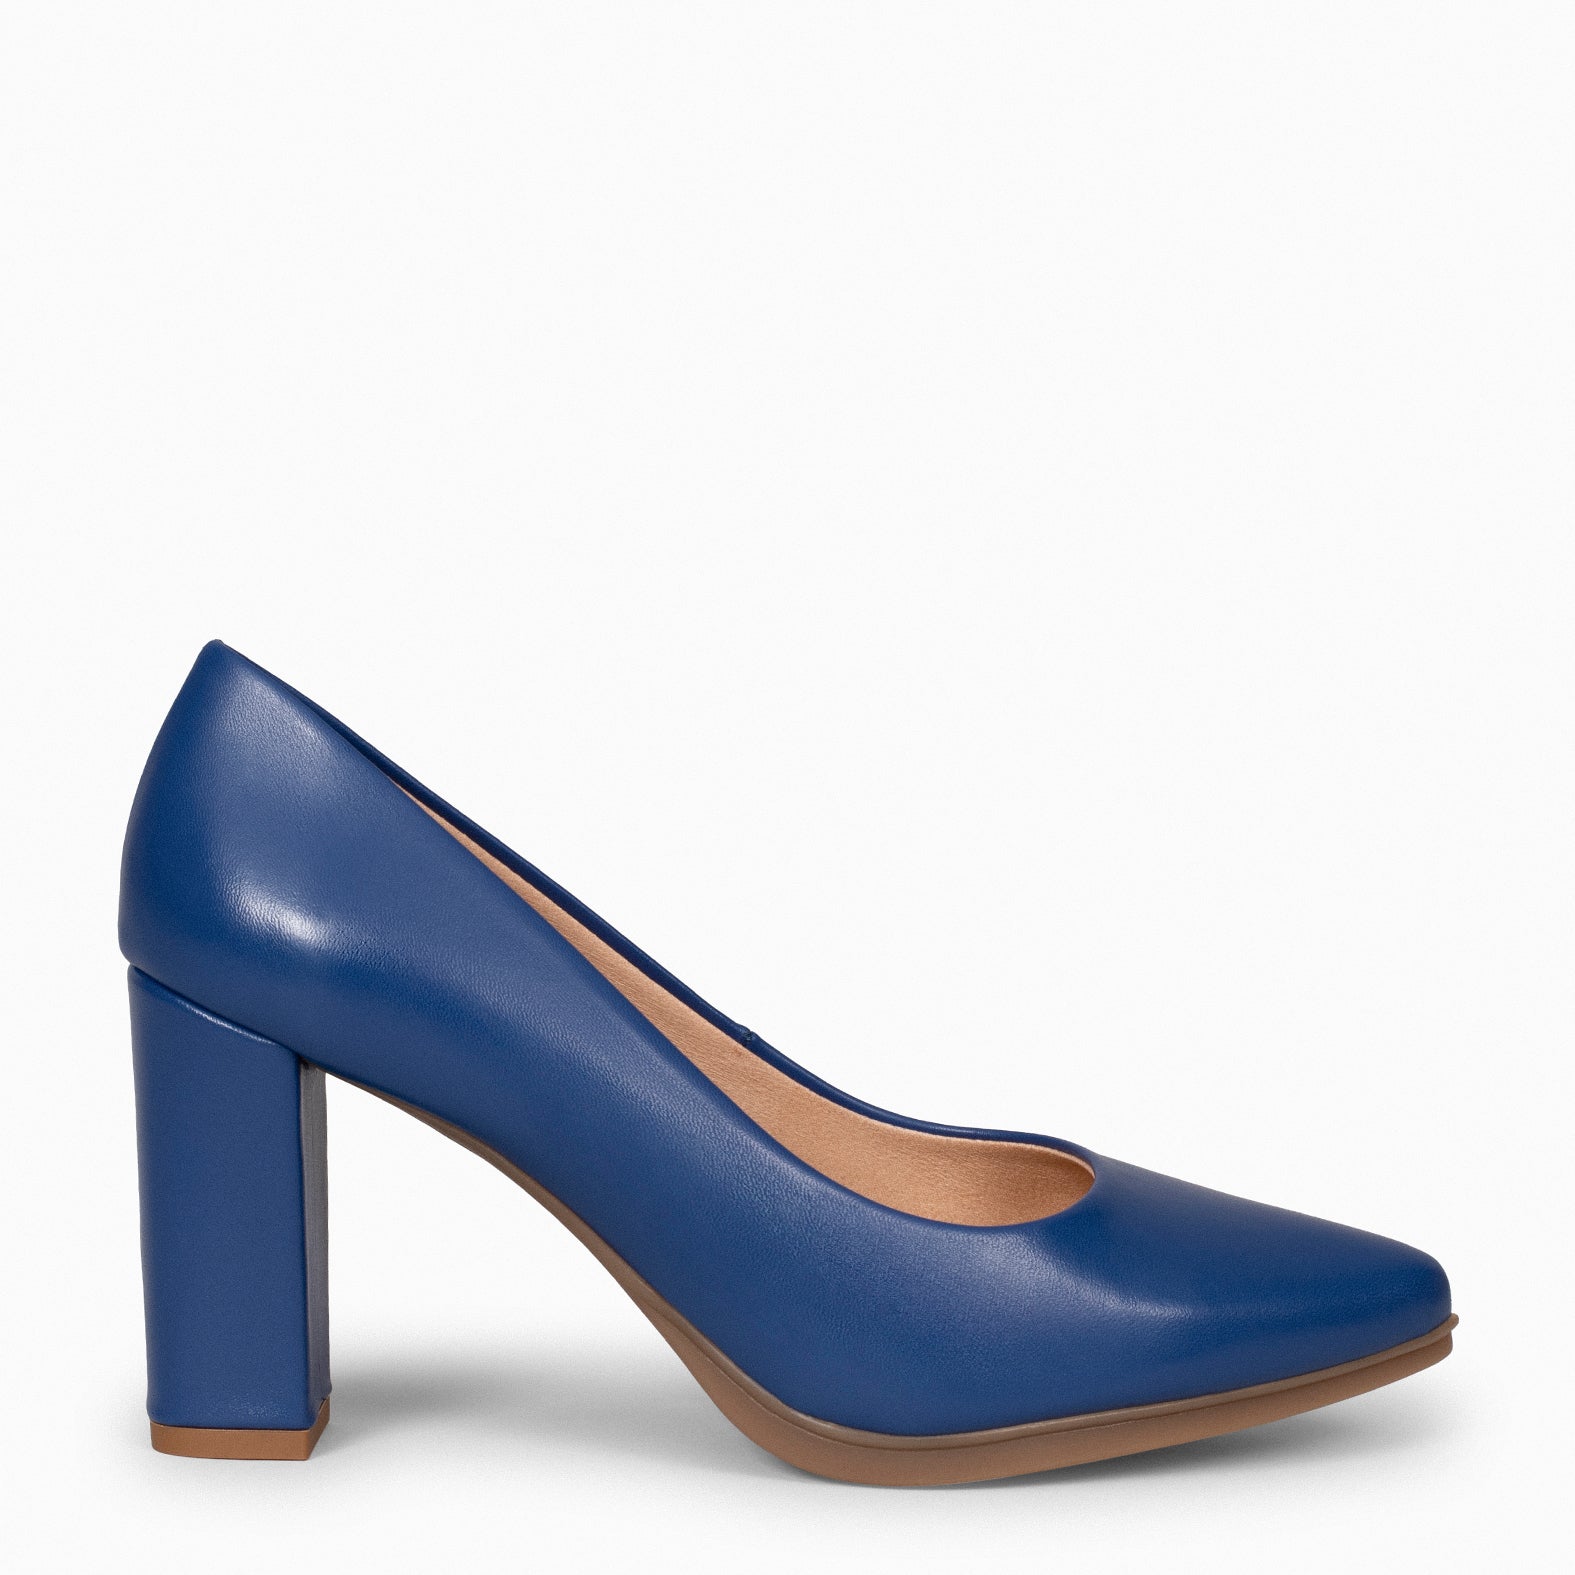 URBAN SALON – ELECTRIC BLUE nappa leather high heel